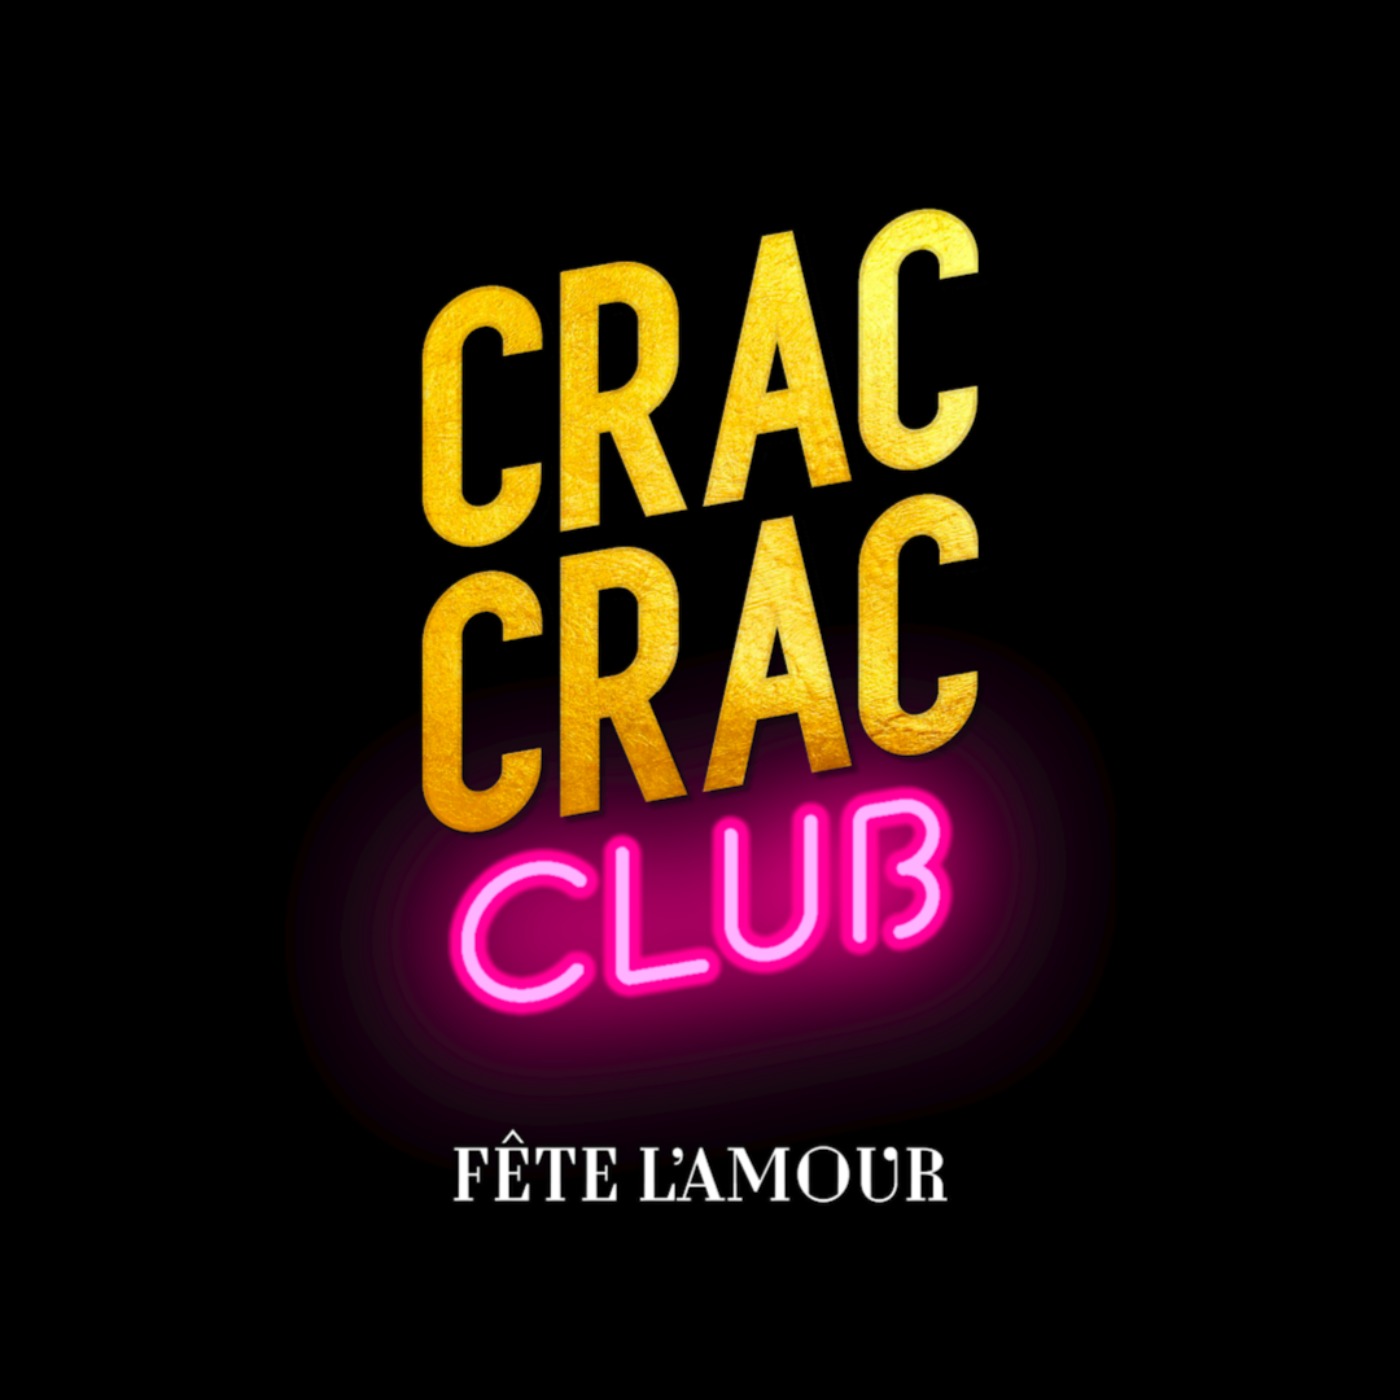 CRAC CRAC CLUB FÊTE L'AMOUR